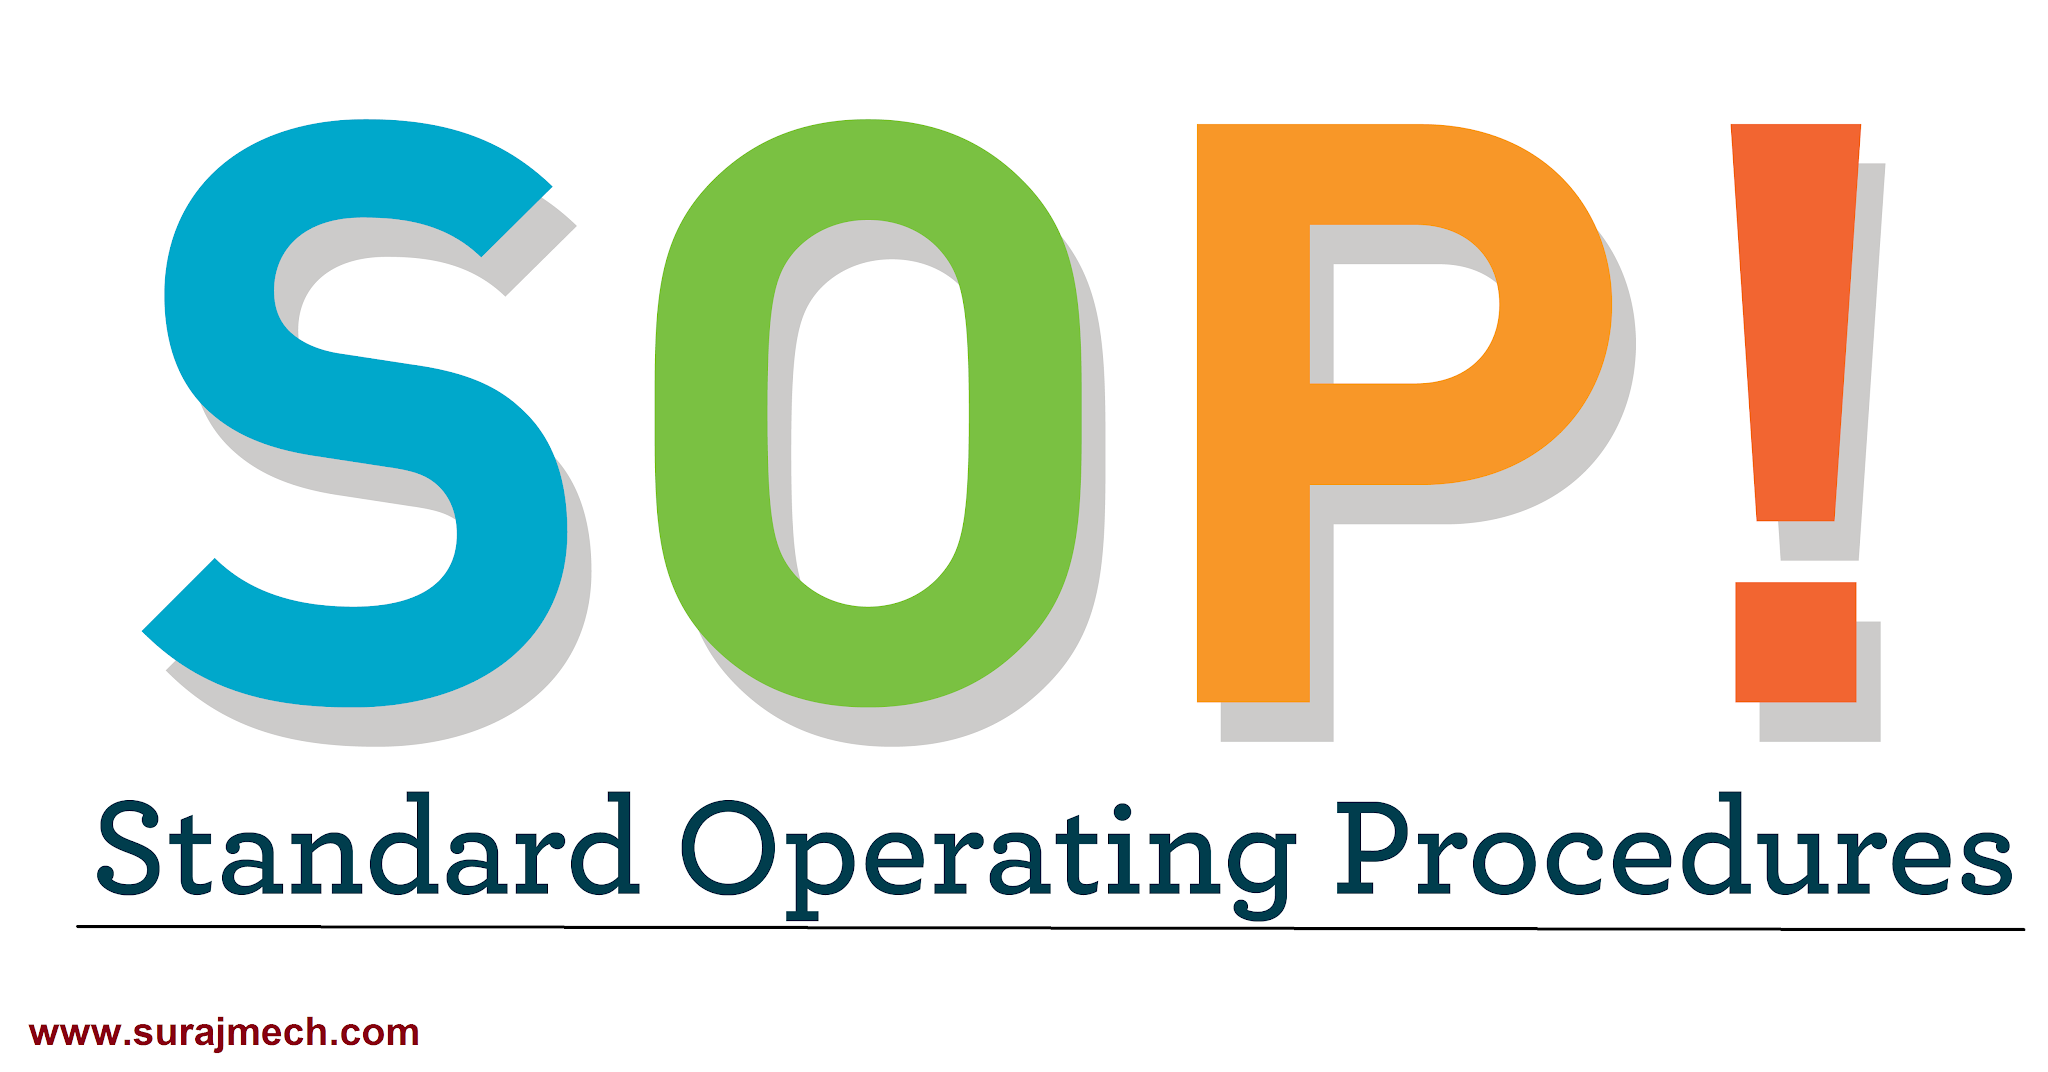 What is SOP / Standard Operating Procedure